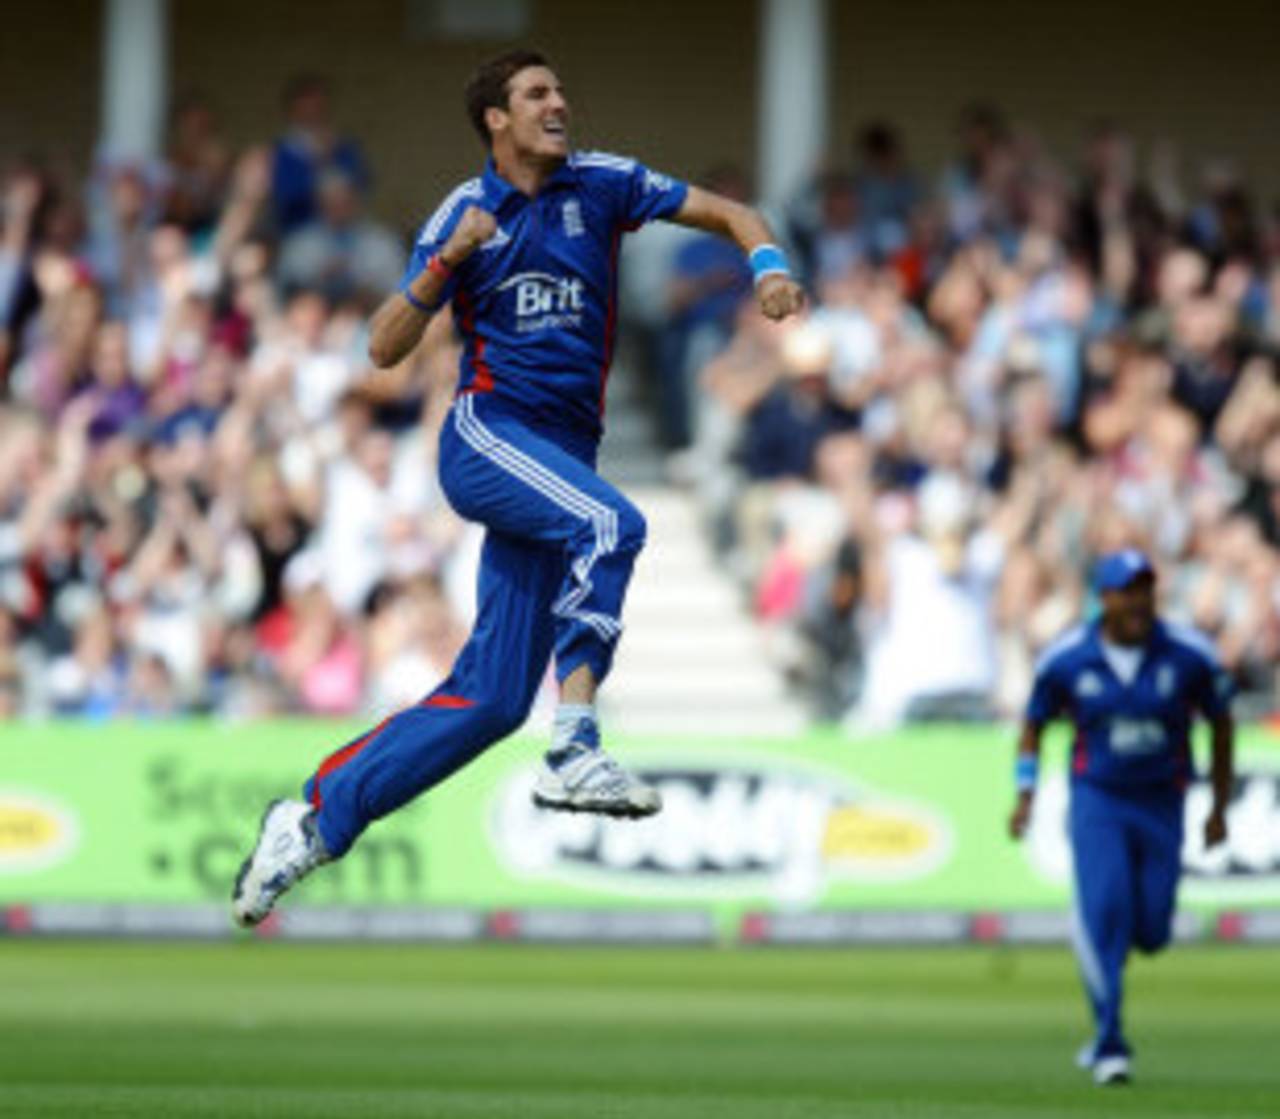 Steve Finn leaps for joy after having Chris Gayle caught at fine leg, England v West Indies, T20, Trent Bridge, June, 24, 2012